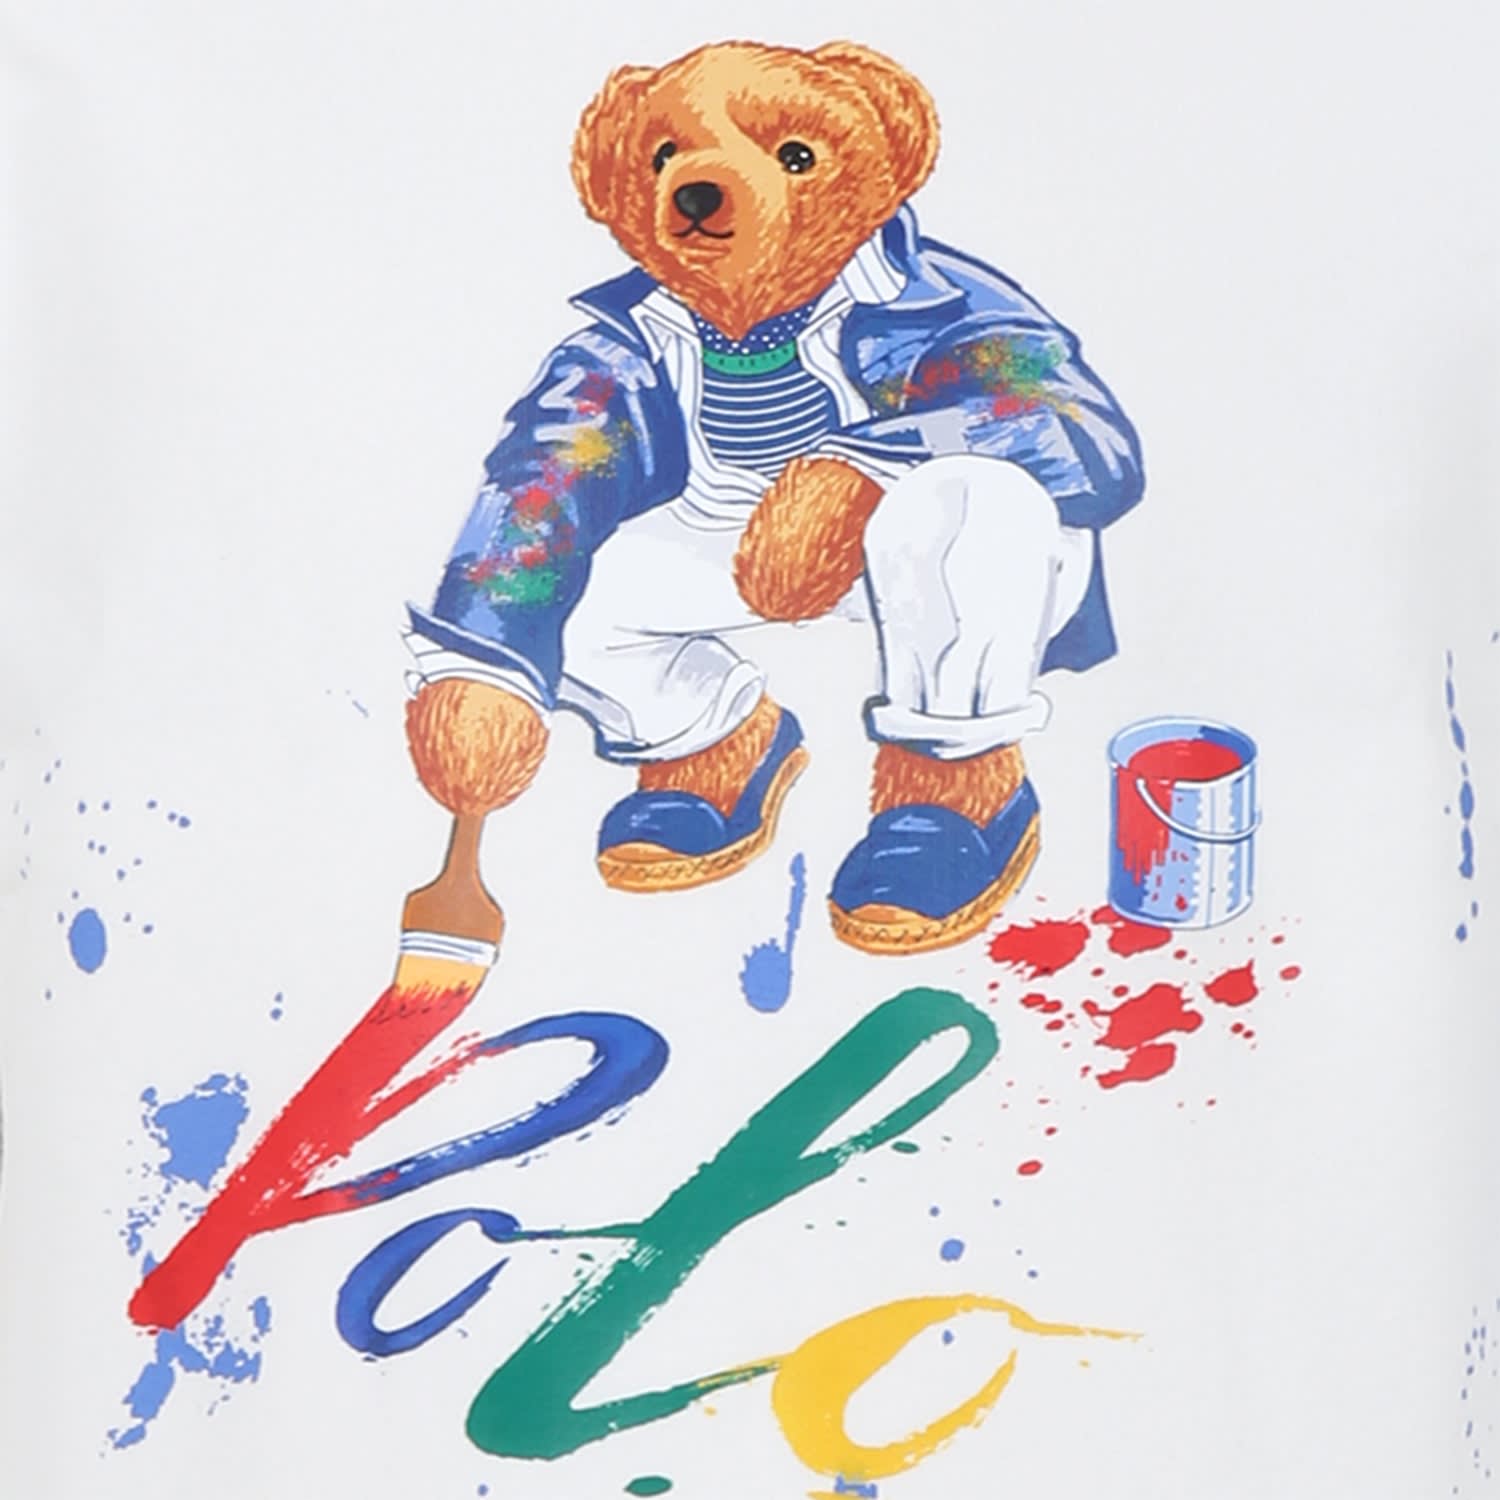 Shop Ralph Lauren White Sweatshirt For Boy With Polo Bear